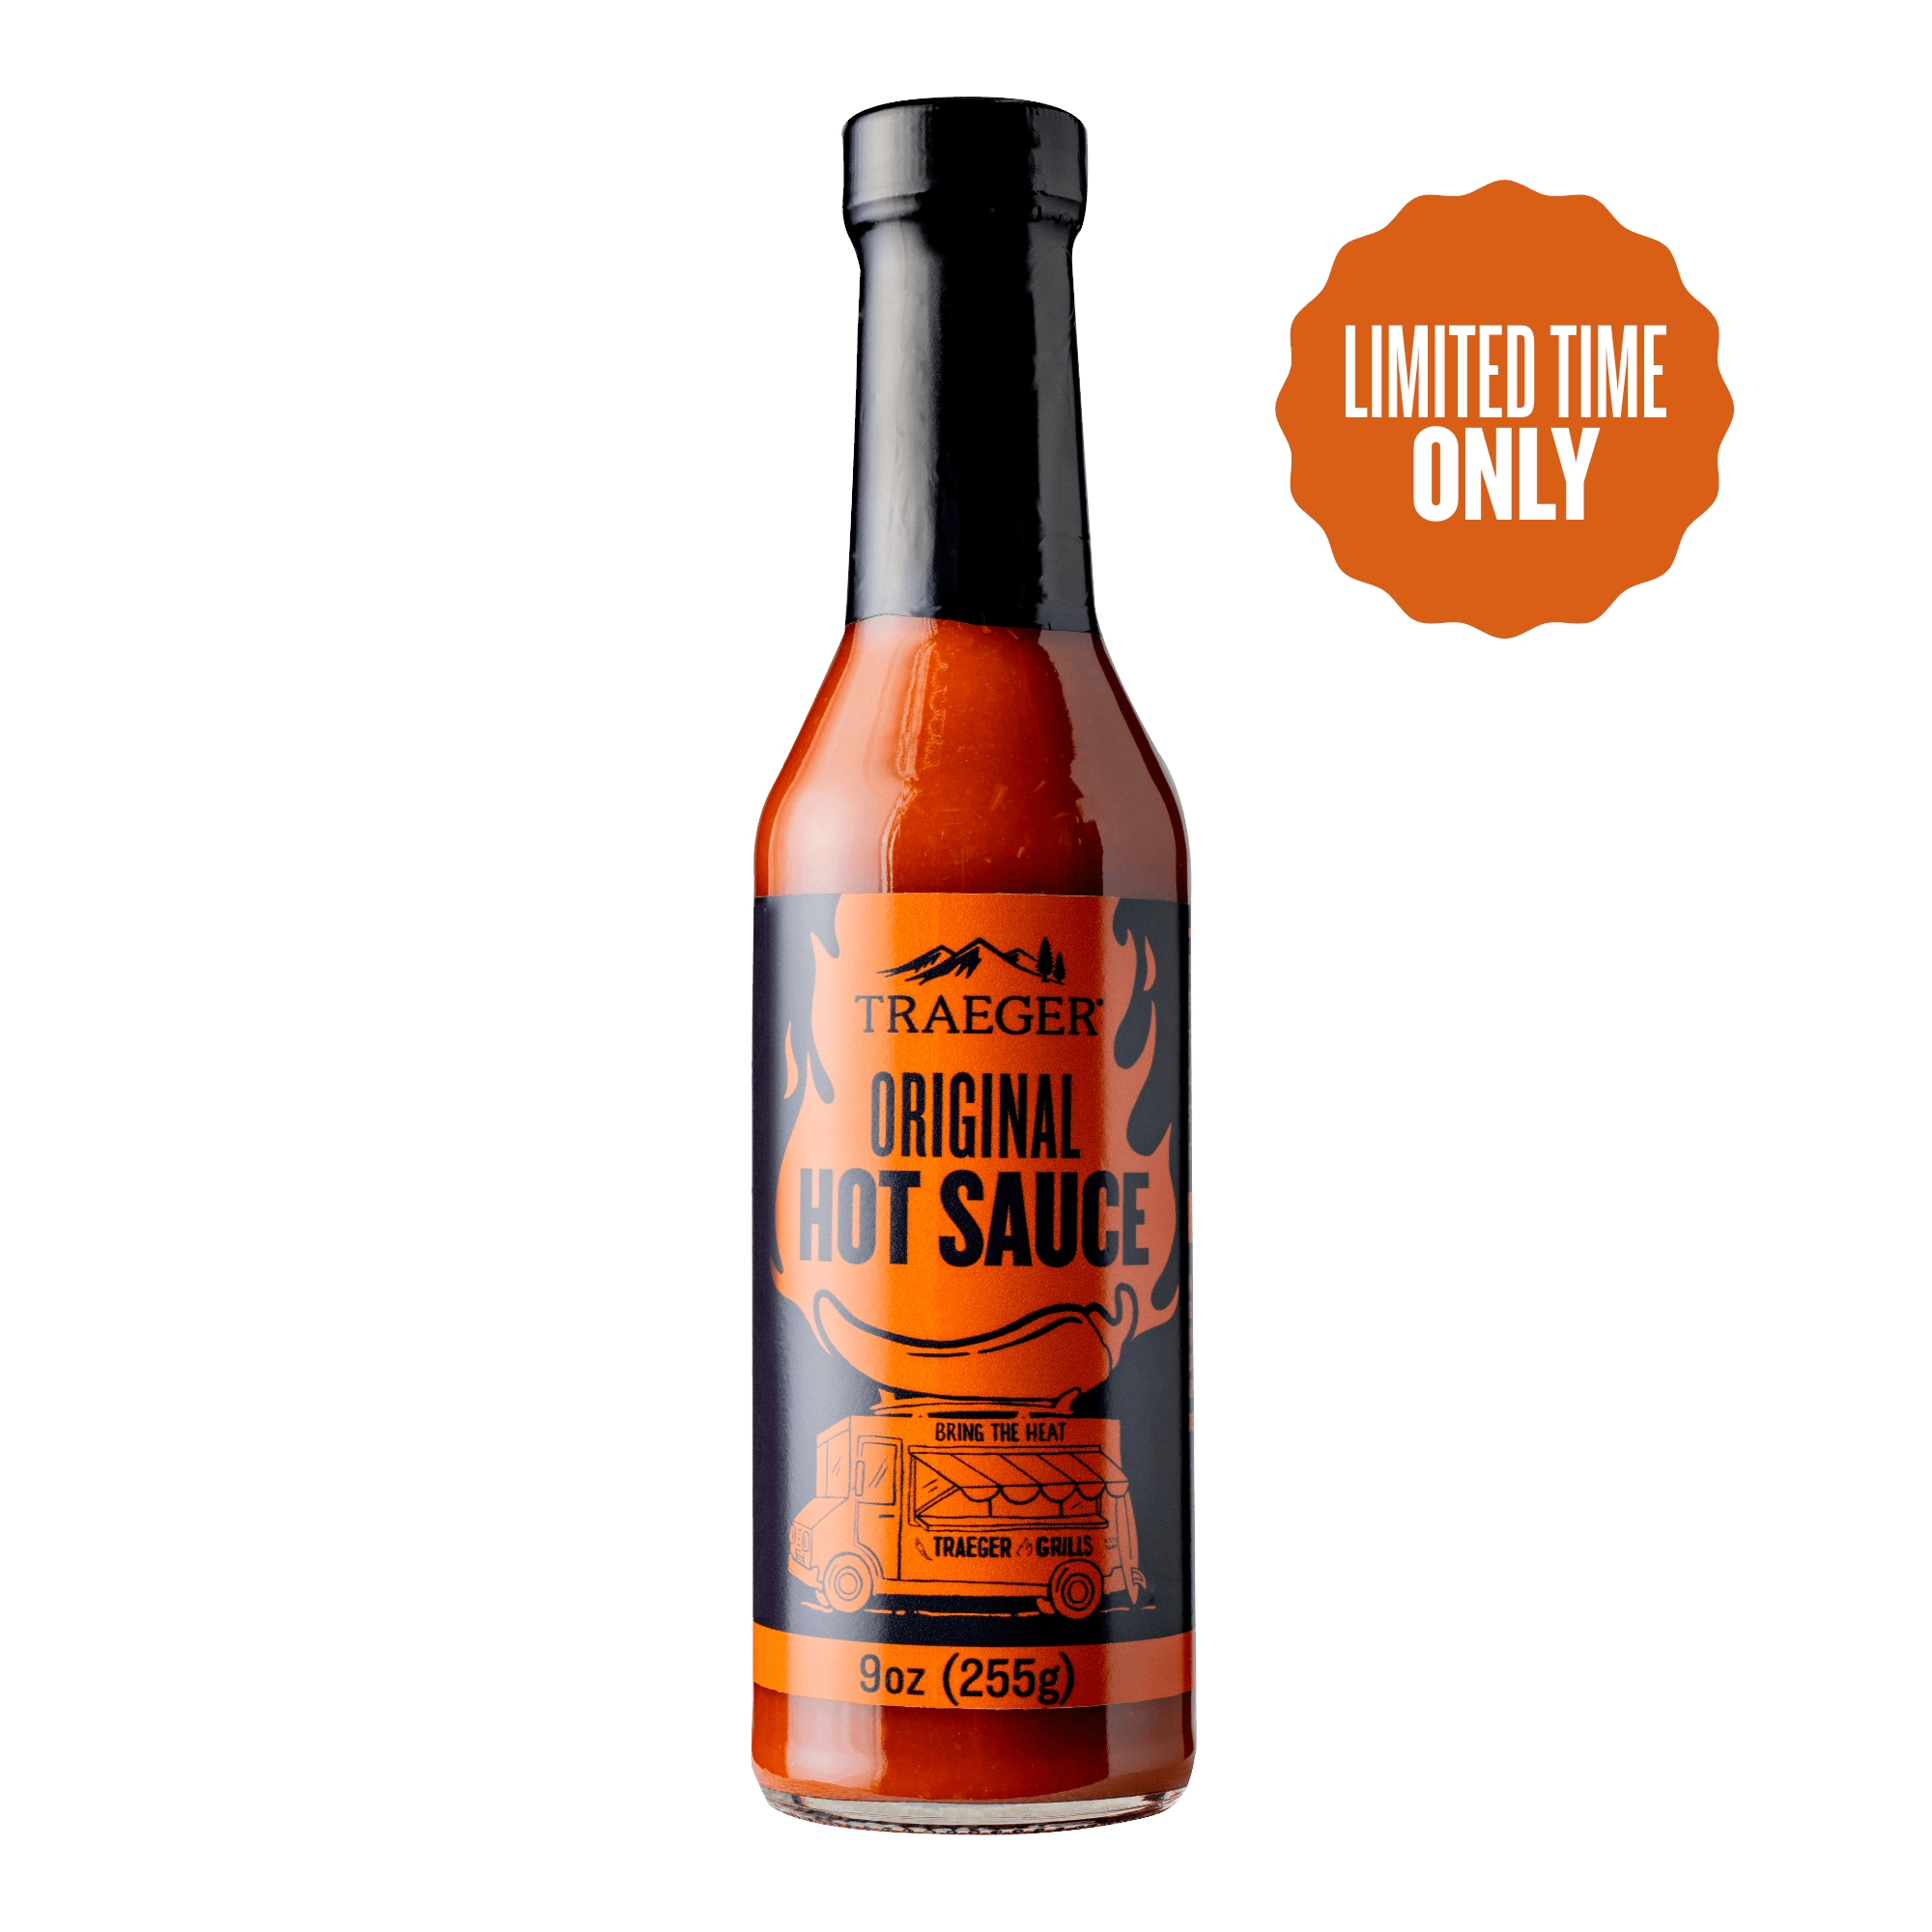 HOT001 Original Hot Sauce, Spicy, Tangy Flavor, 9 oz Bottle